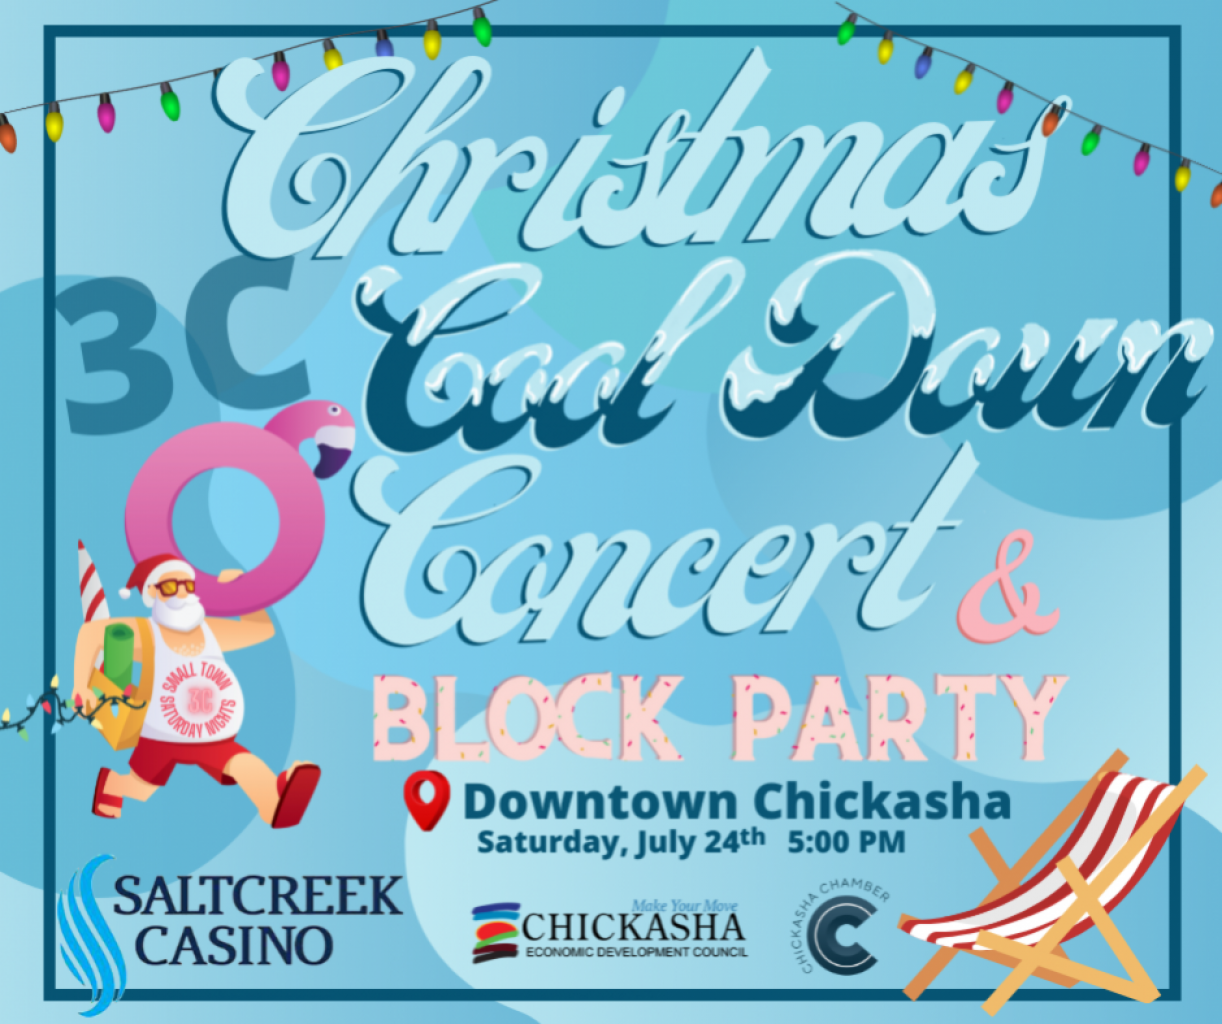 Chickasha Chamber, EDC present  “Christmas Cool Down & Block Party” July 24